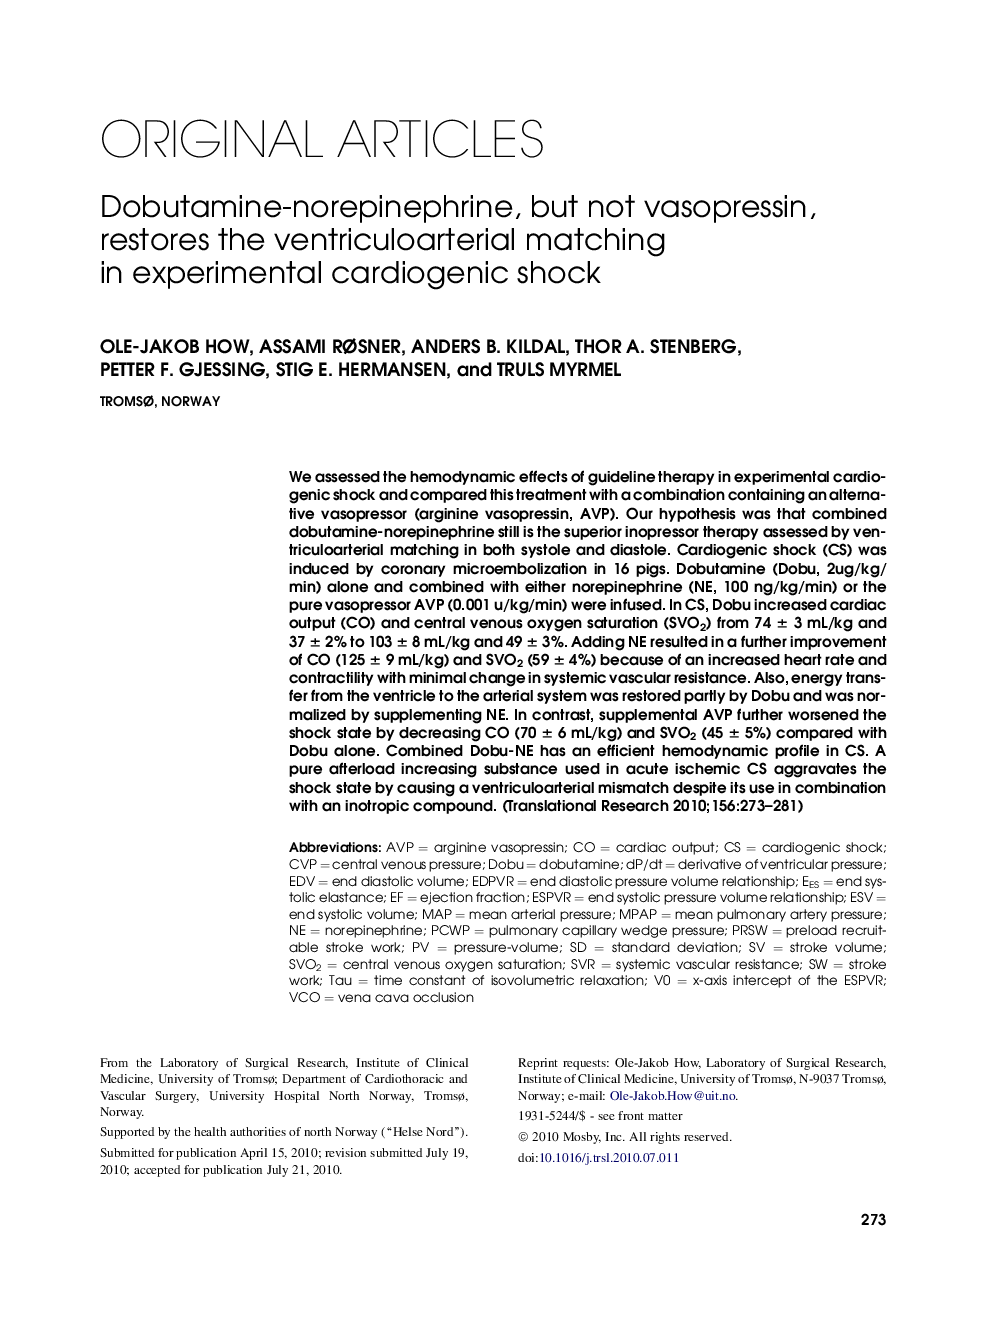 Dobutamine-norepinephrine, but not vasopressin, restores the ventriculoarterial matching in experimental cardiogenic shock 